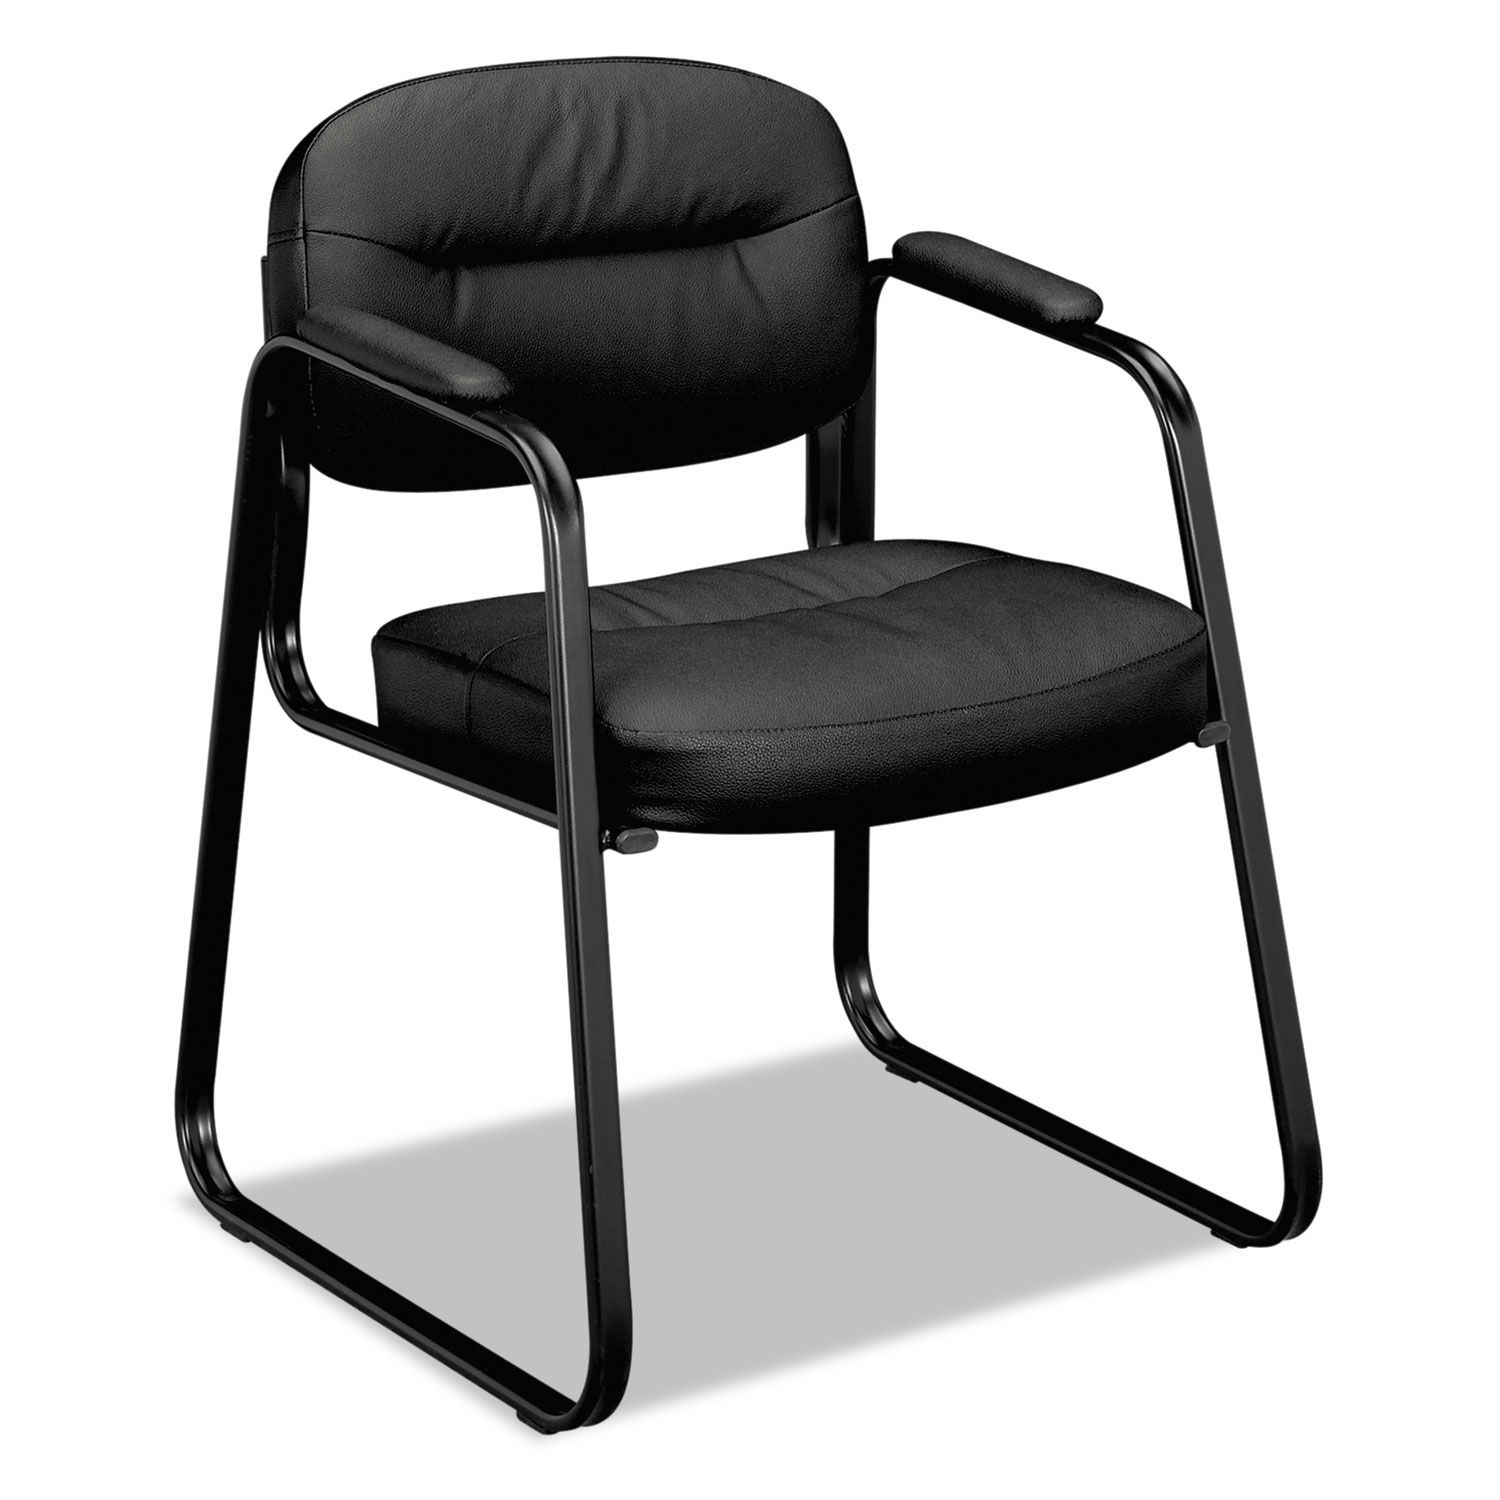 HVL653 SofThread Bonded Leather Guest Chair 22.25" x 23" x 32", Black Seat, Black Back, Black Base